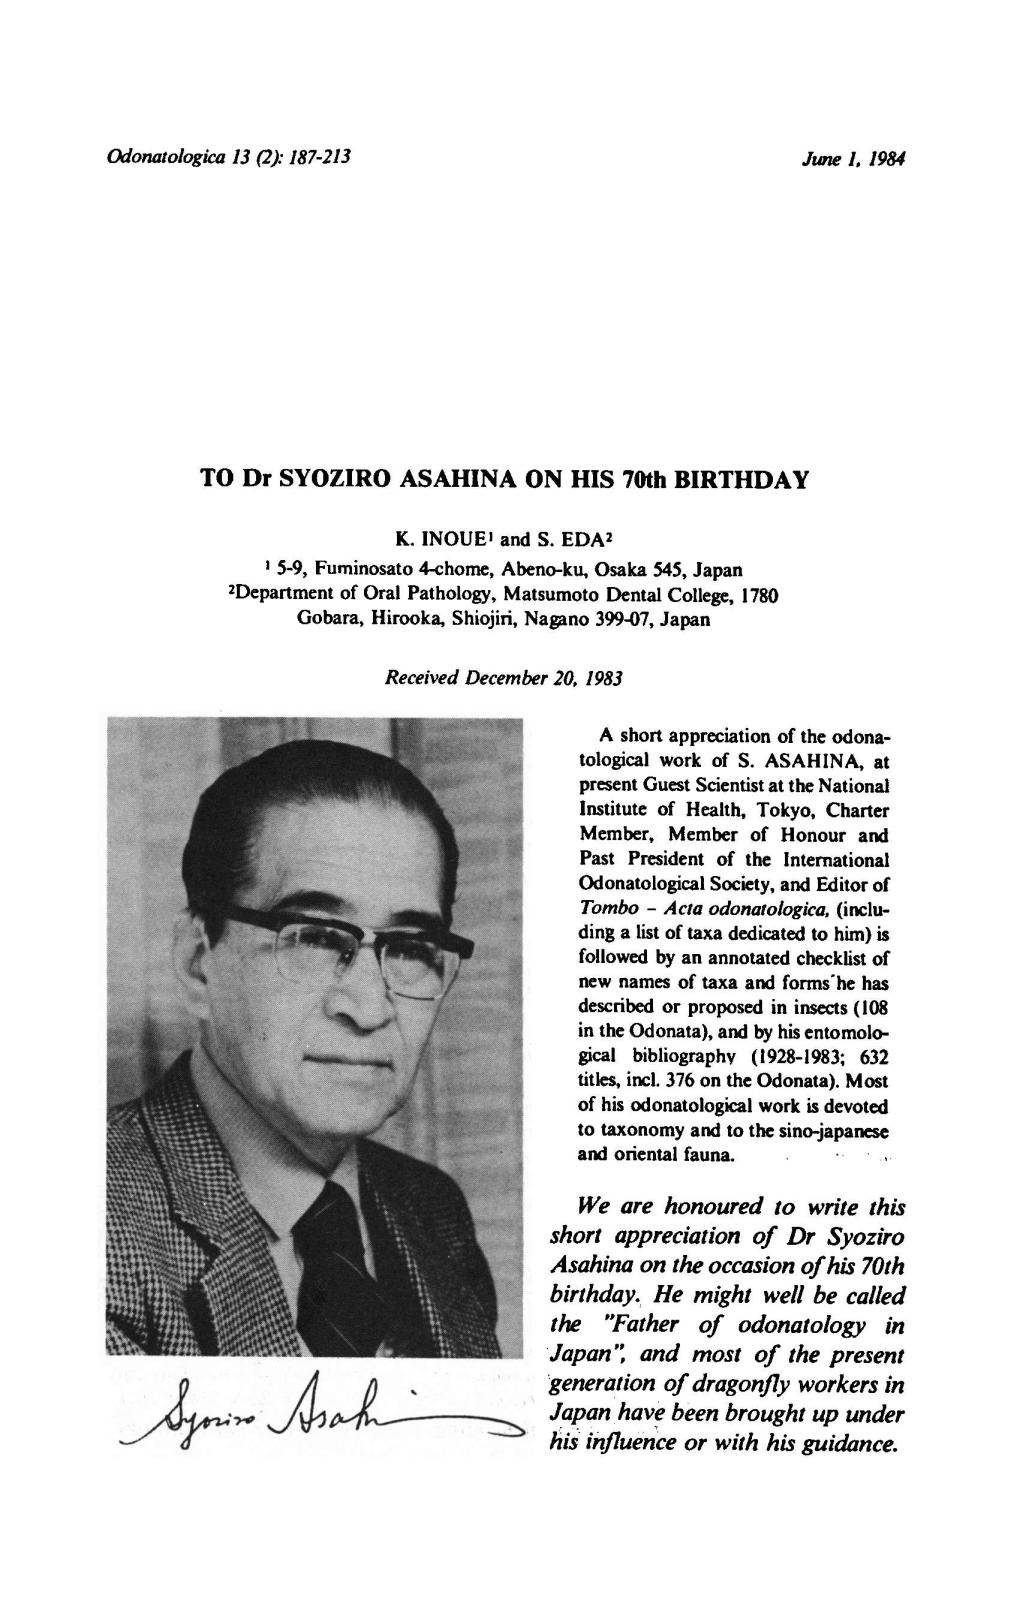 Of Dr Syoziro Birthday. of Odonatology Japan”, Generation of Dragonfly